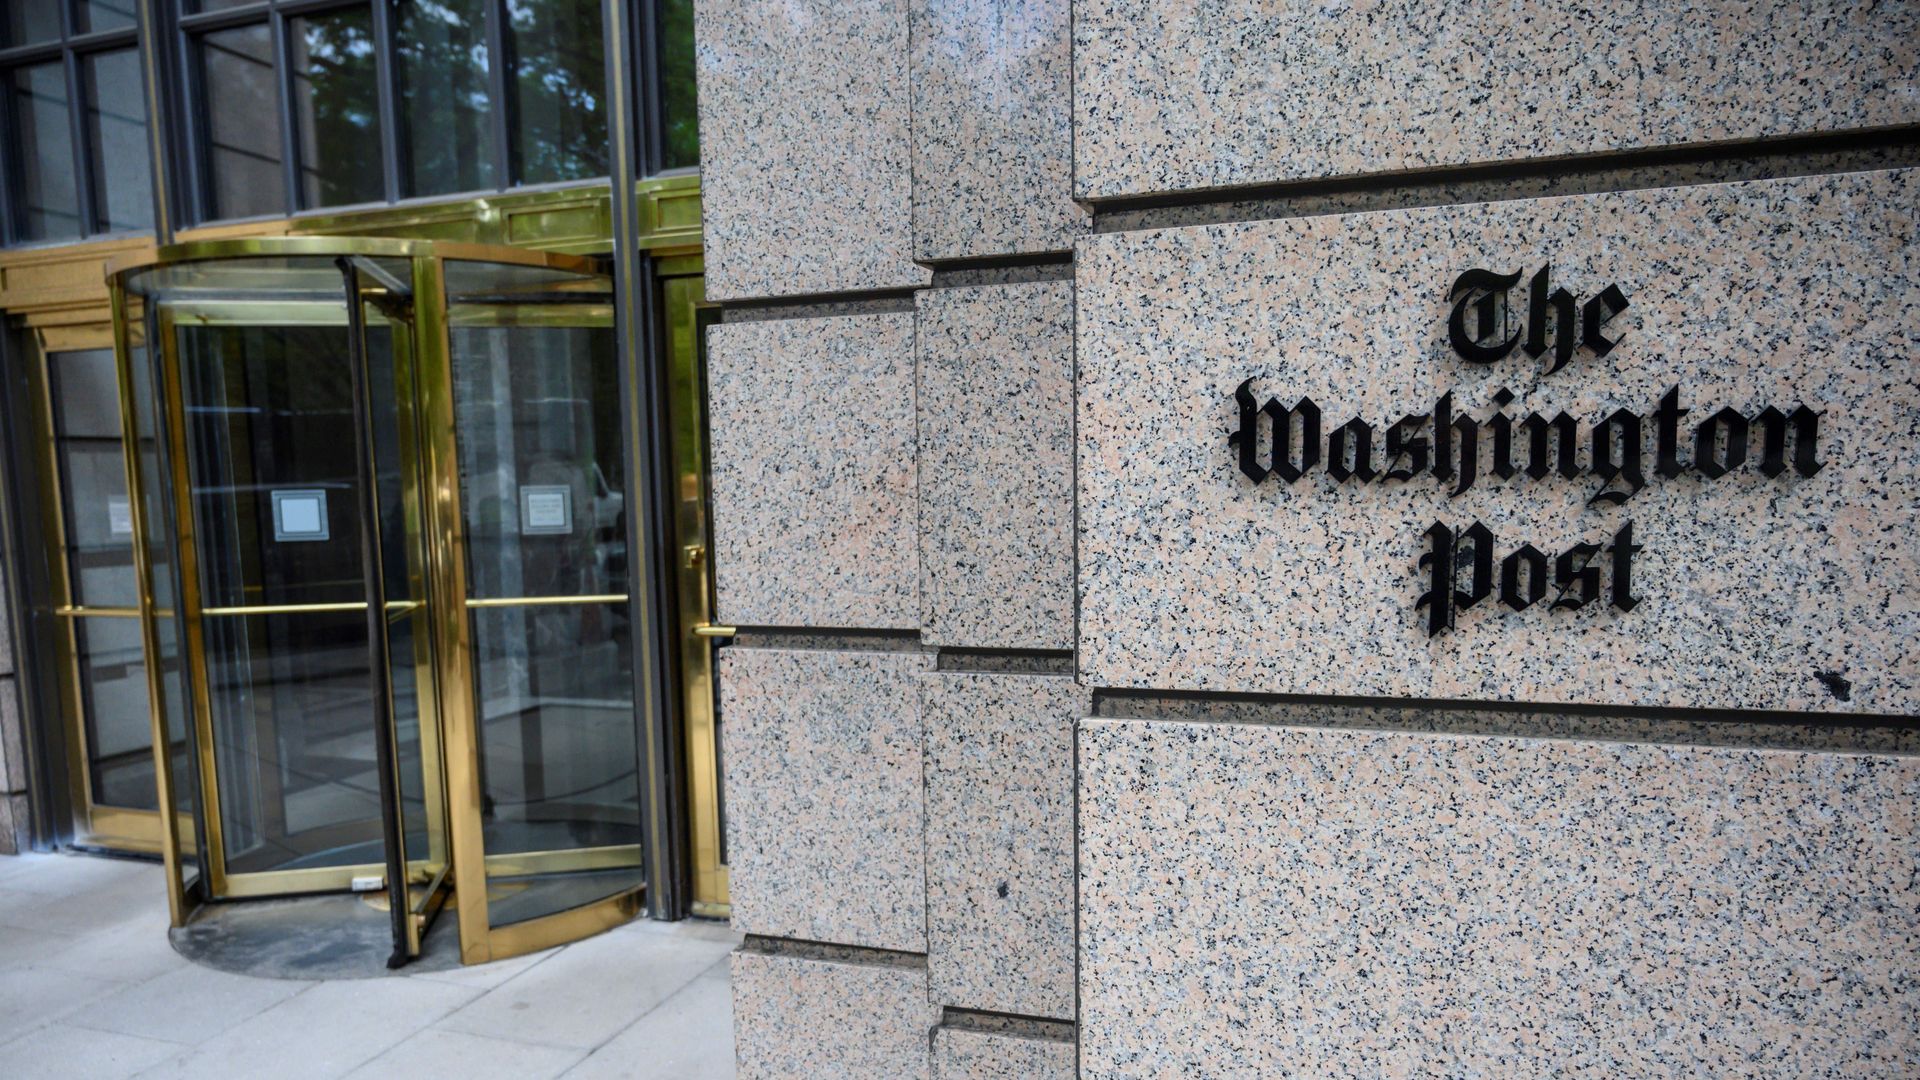 The Washington Post's front entrance